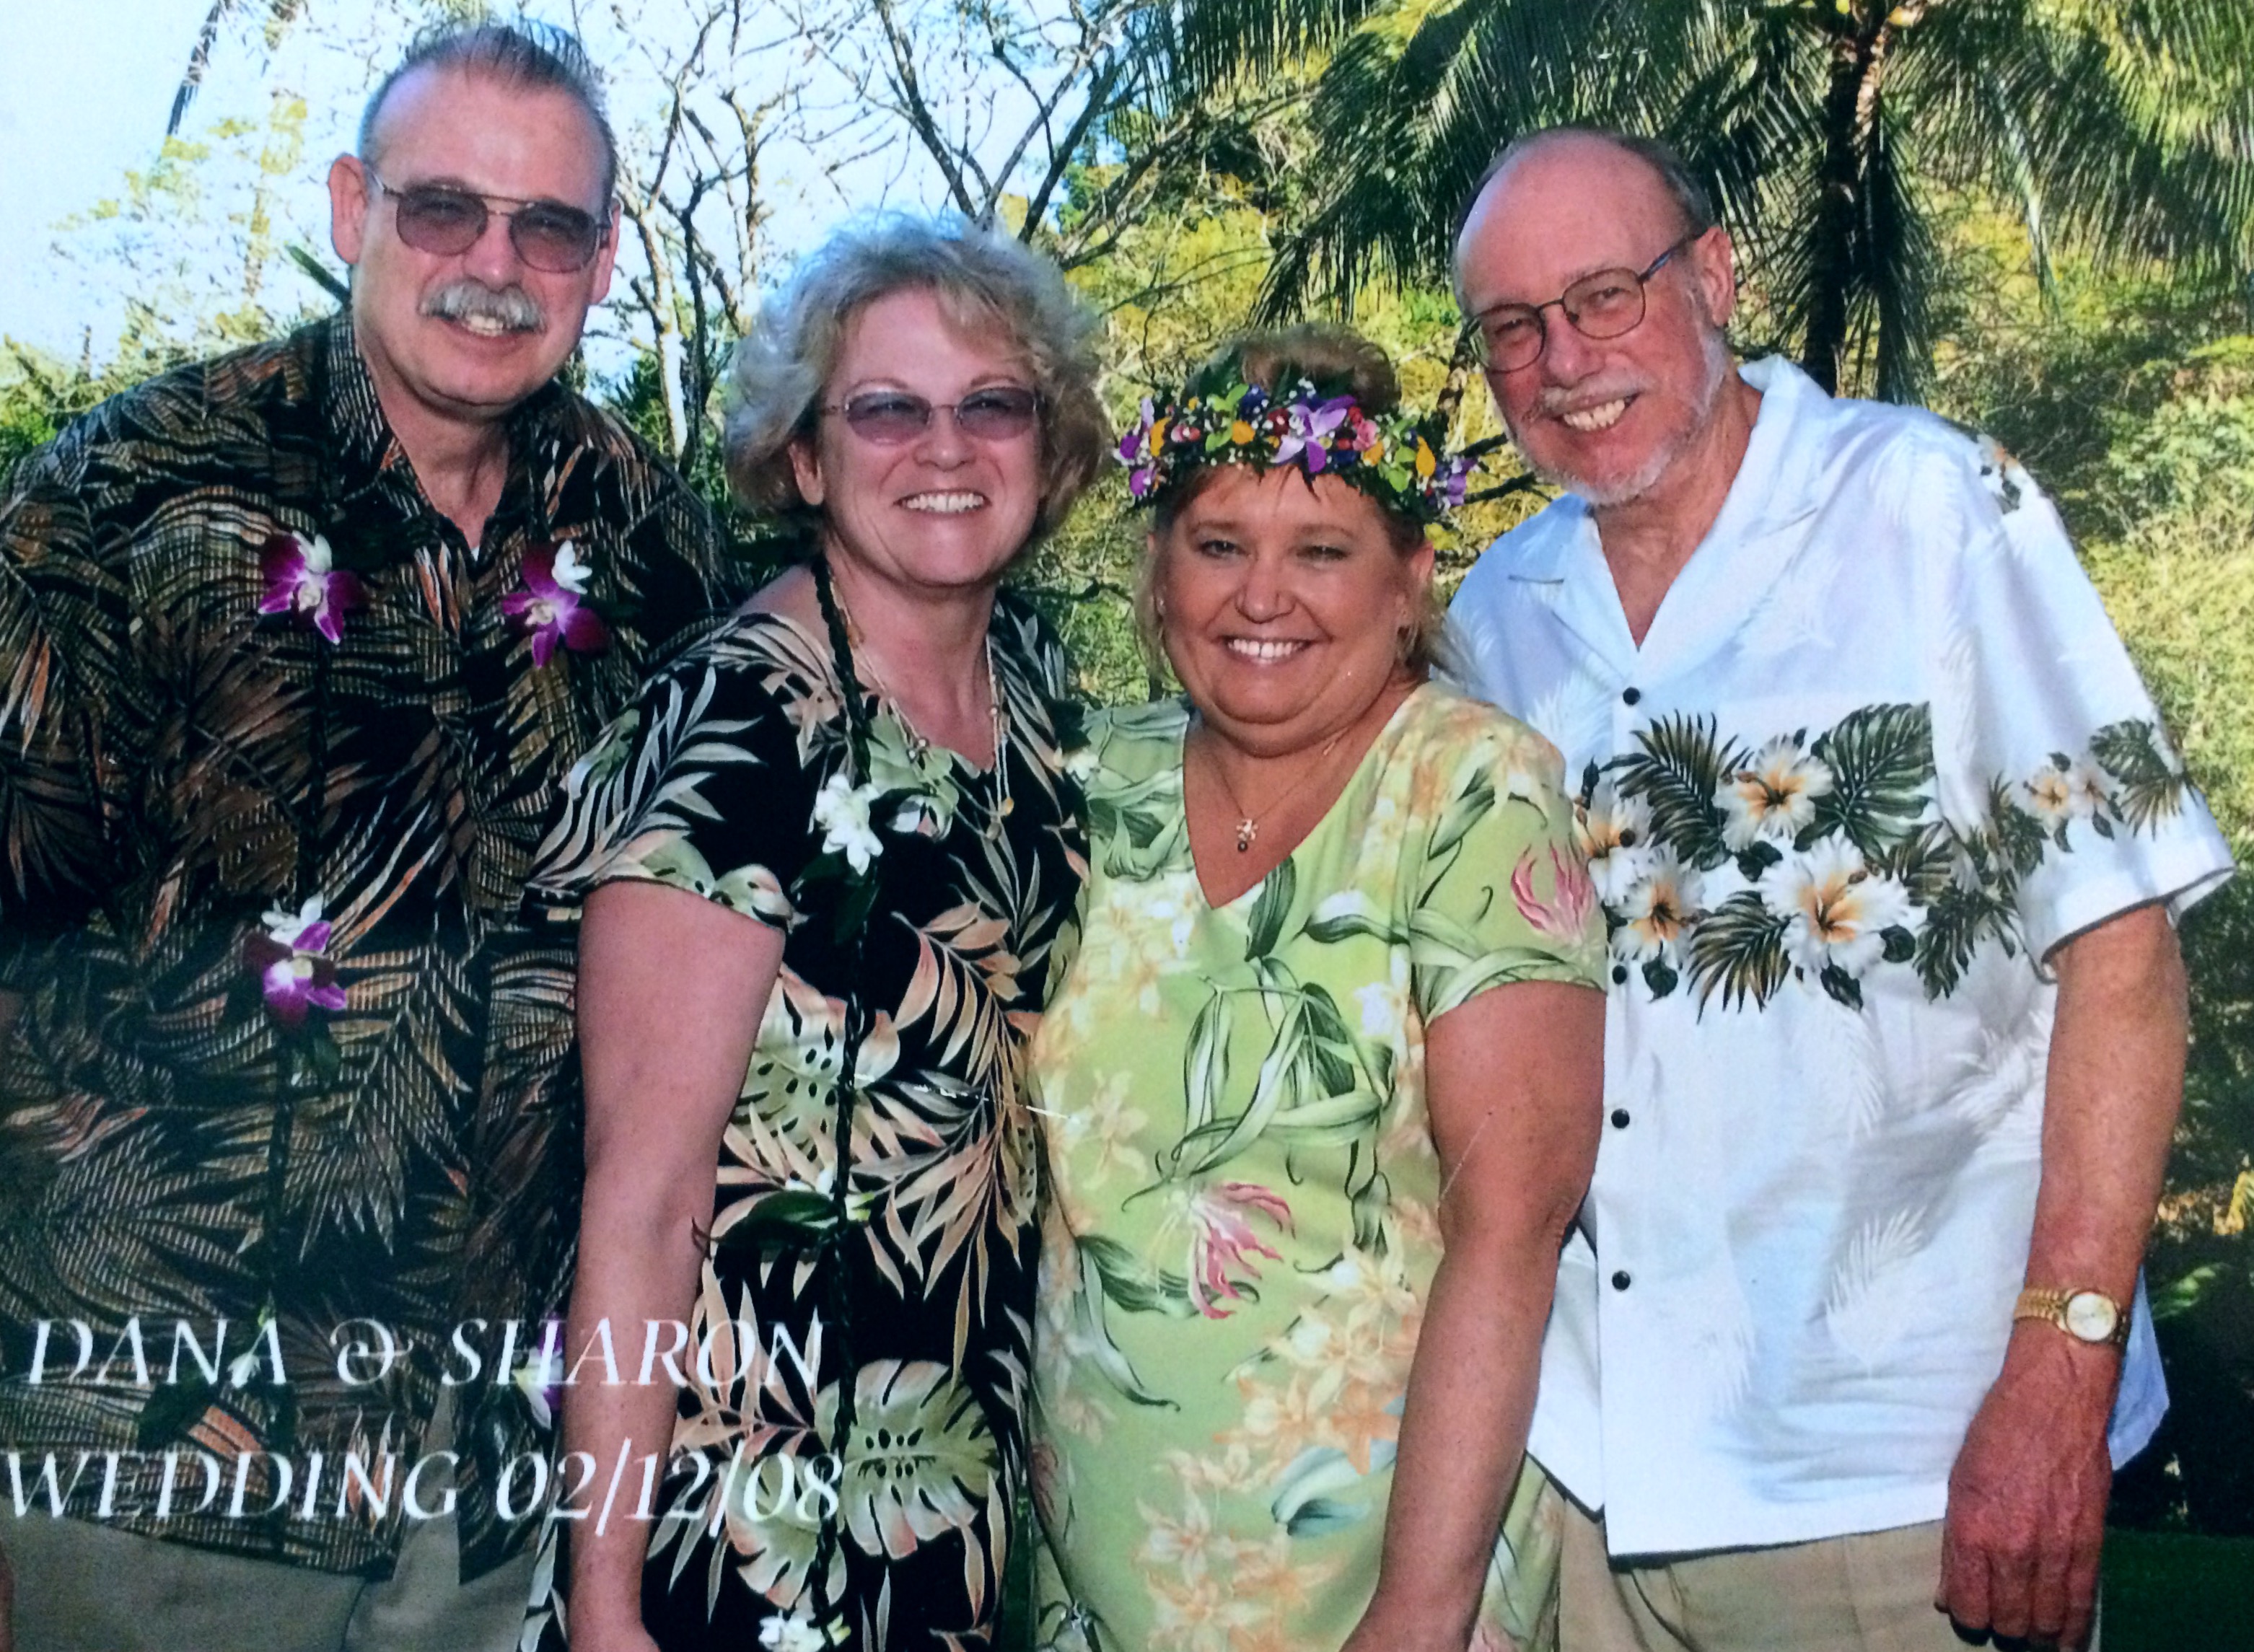 Dana and Sharon's wedding in Hawaii 2008 with Dennis and Diana   